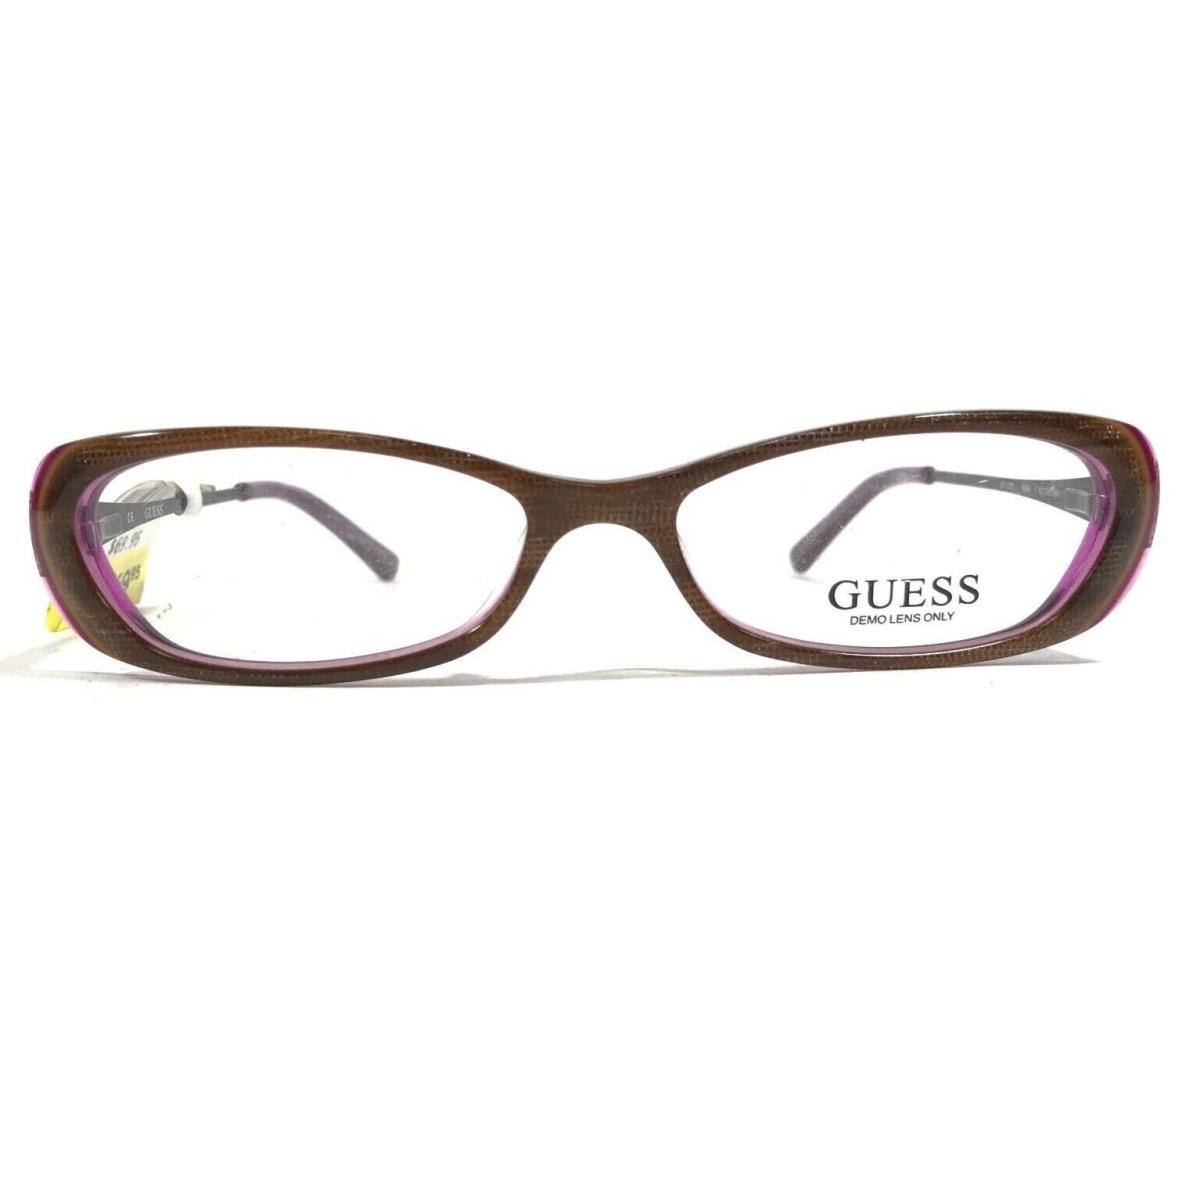 Guess eyeglasses BRN - Multicolor Frame 0